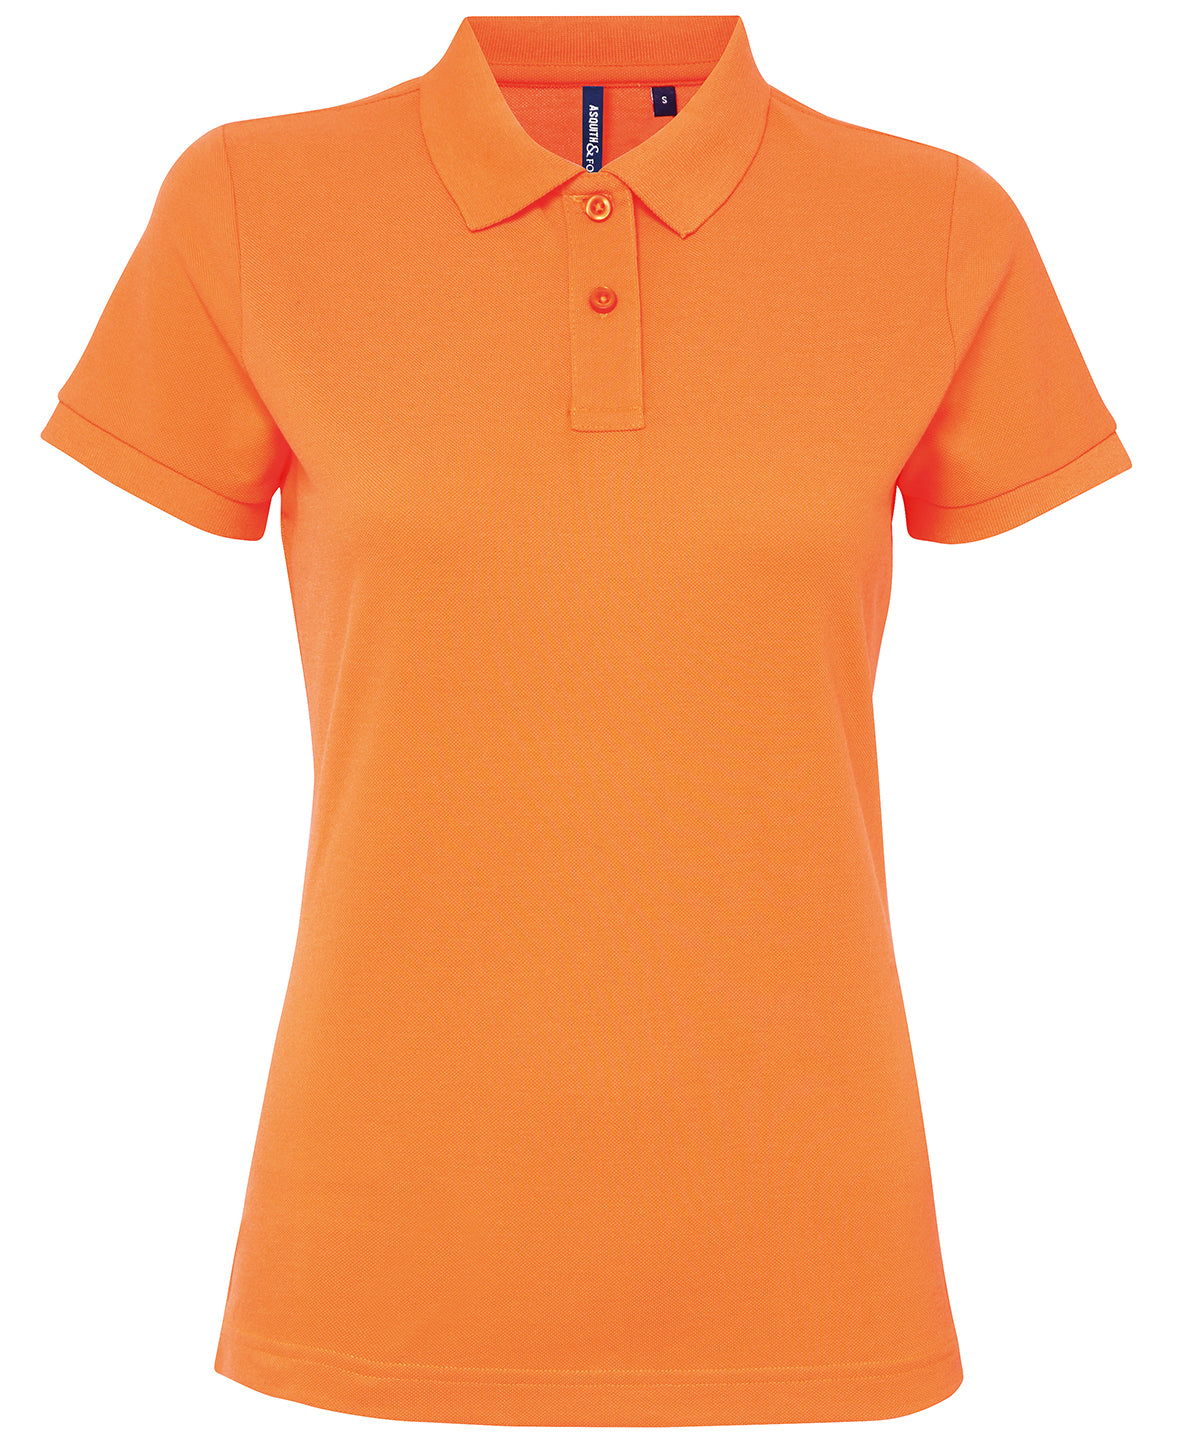 Asquith & Fox Women’s polycotton blend polo Neon Orange